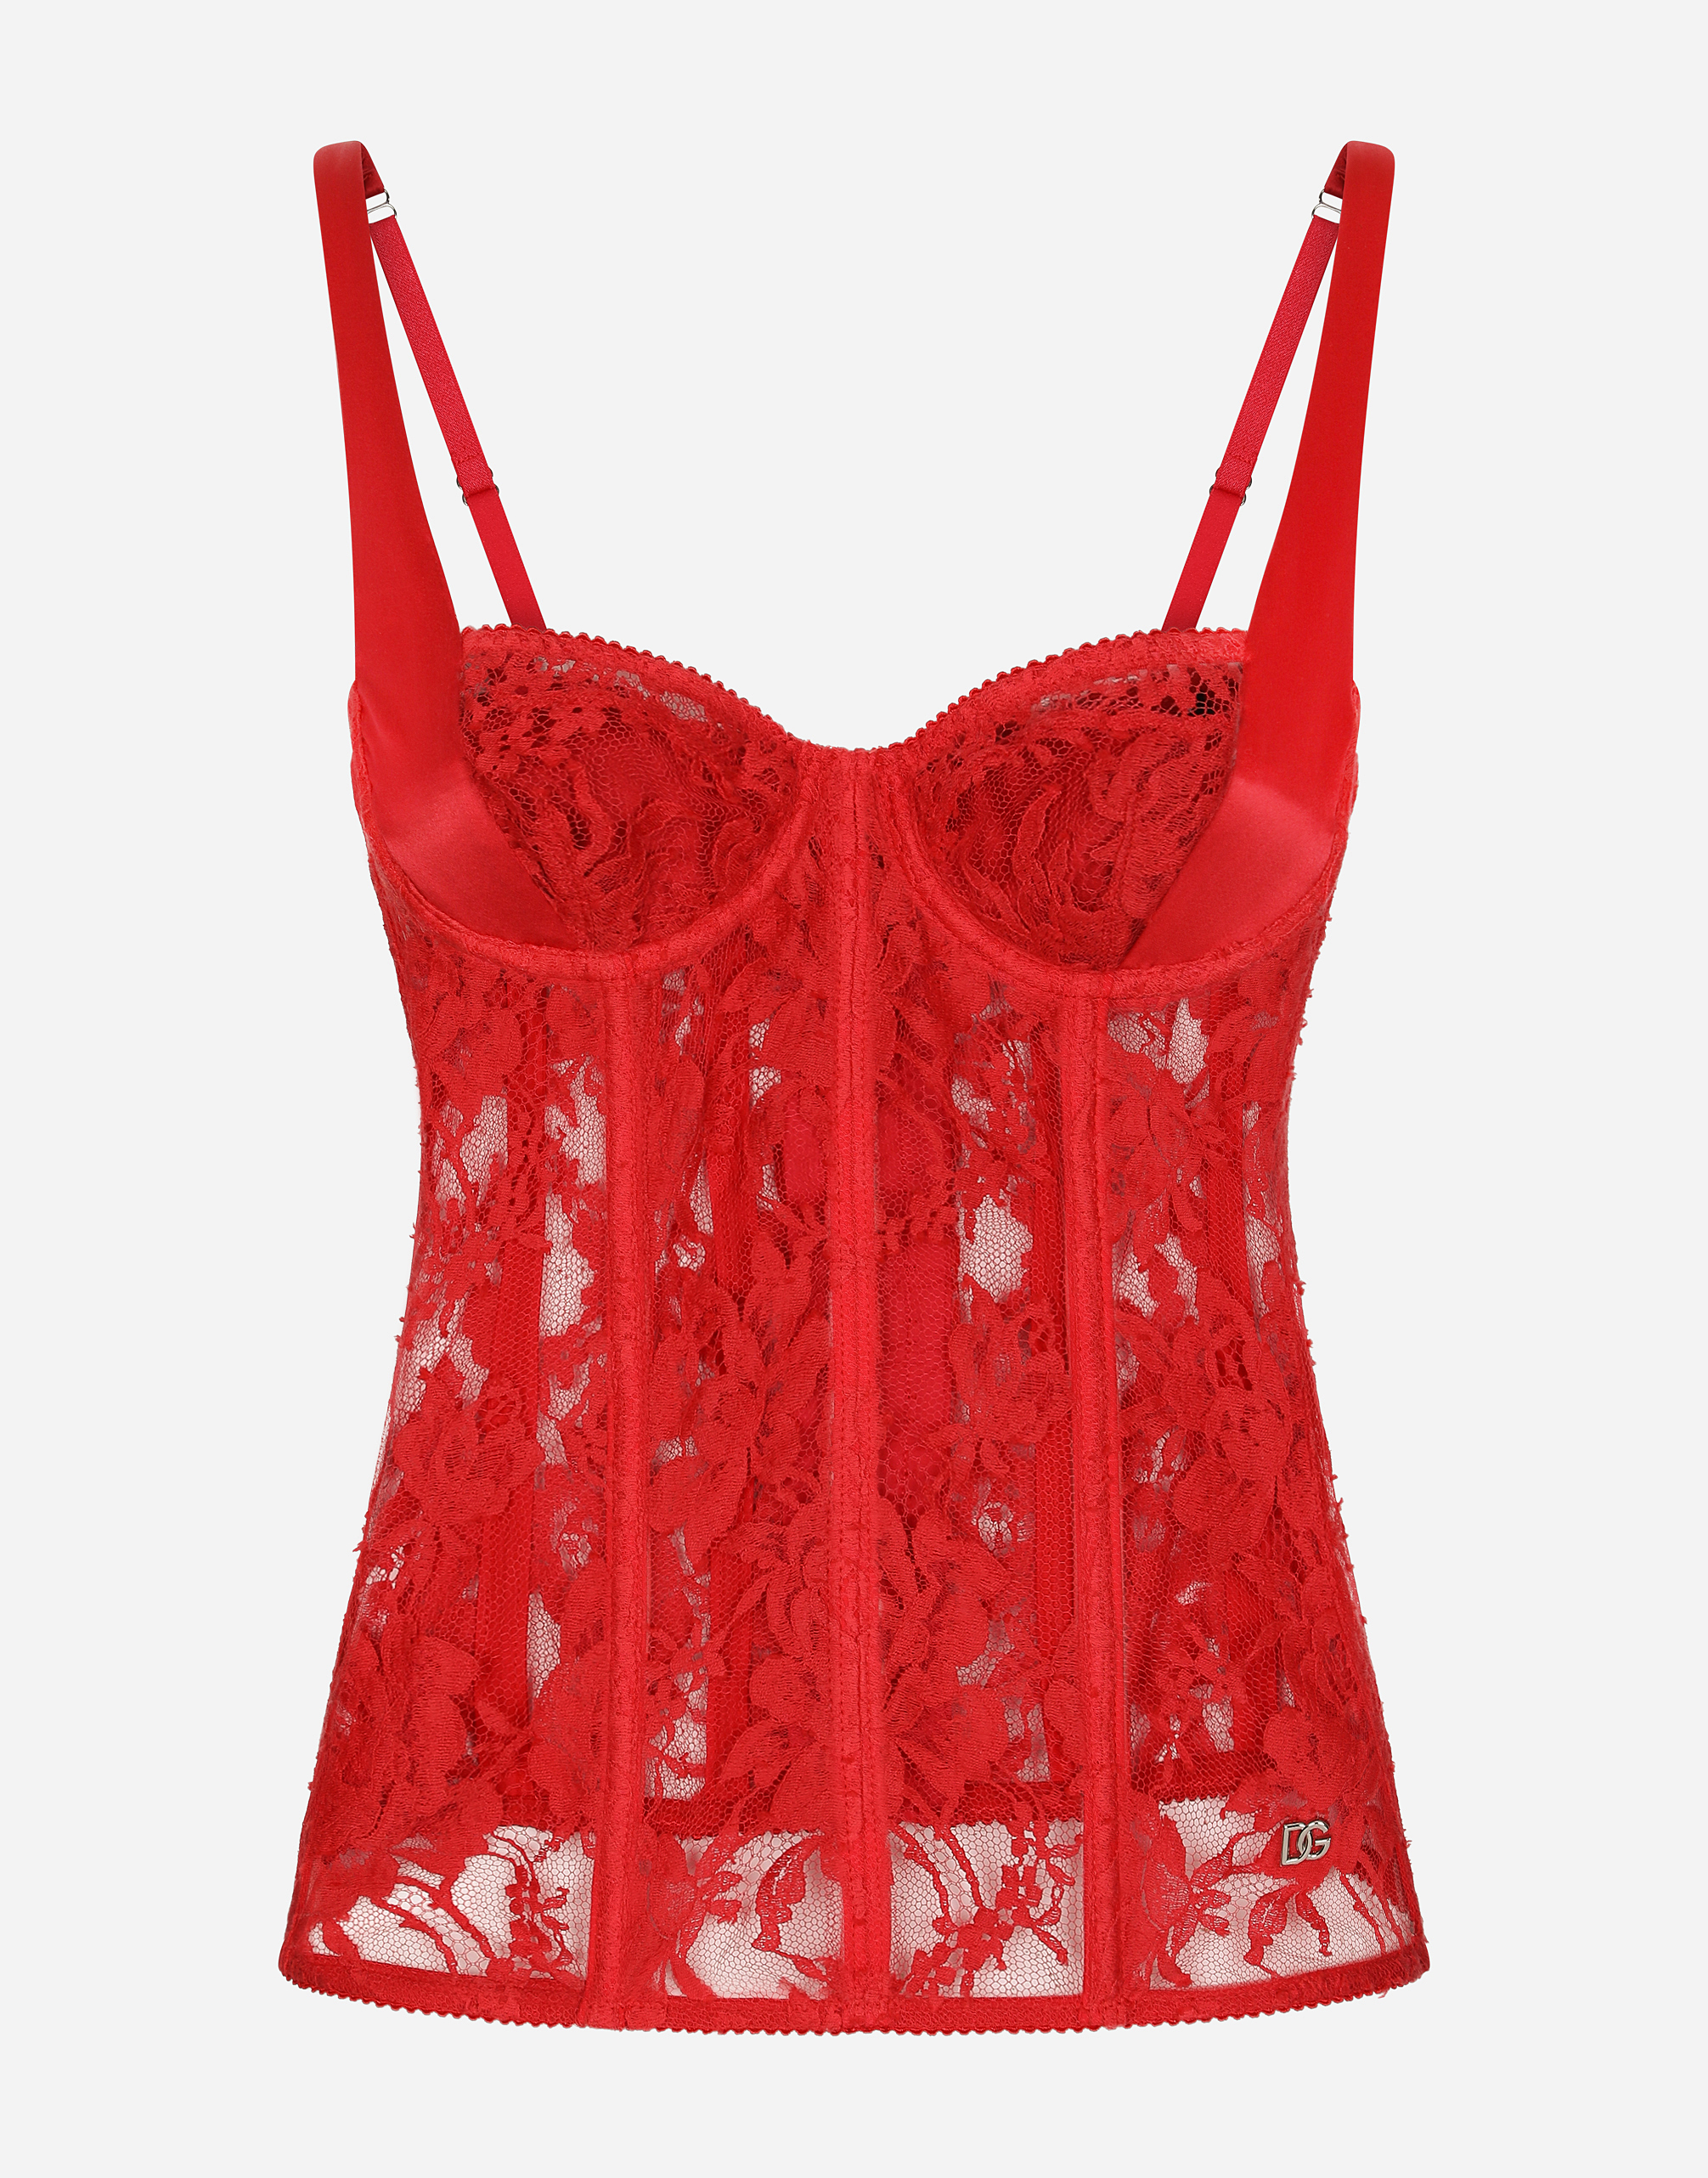 Dolce & Gabbana Lace Underwear Corset In Red